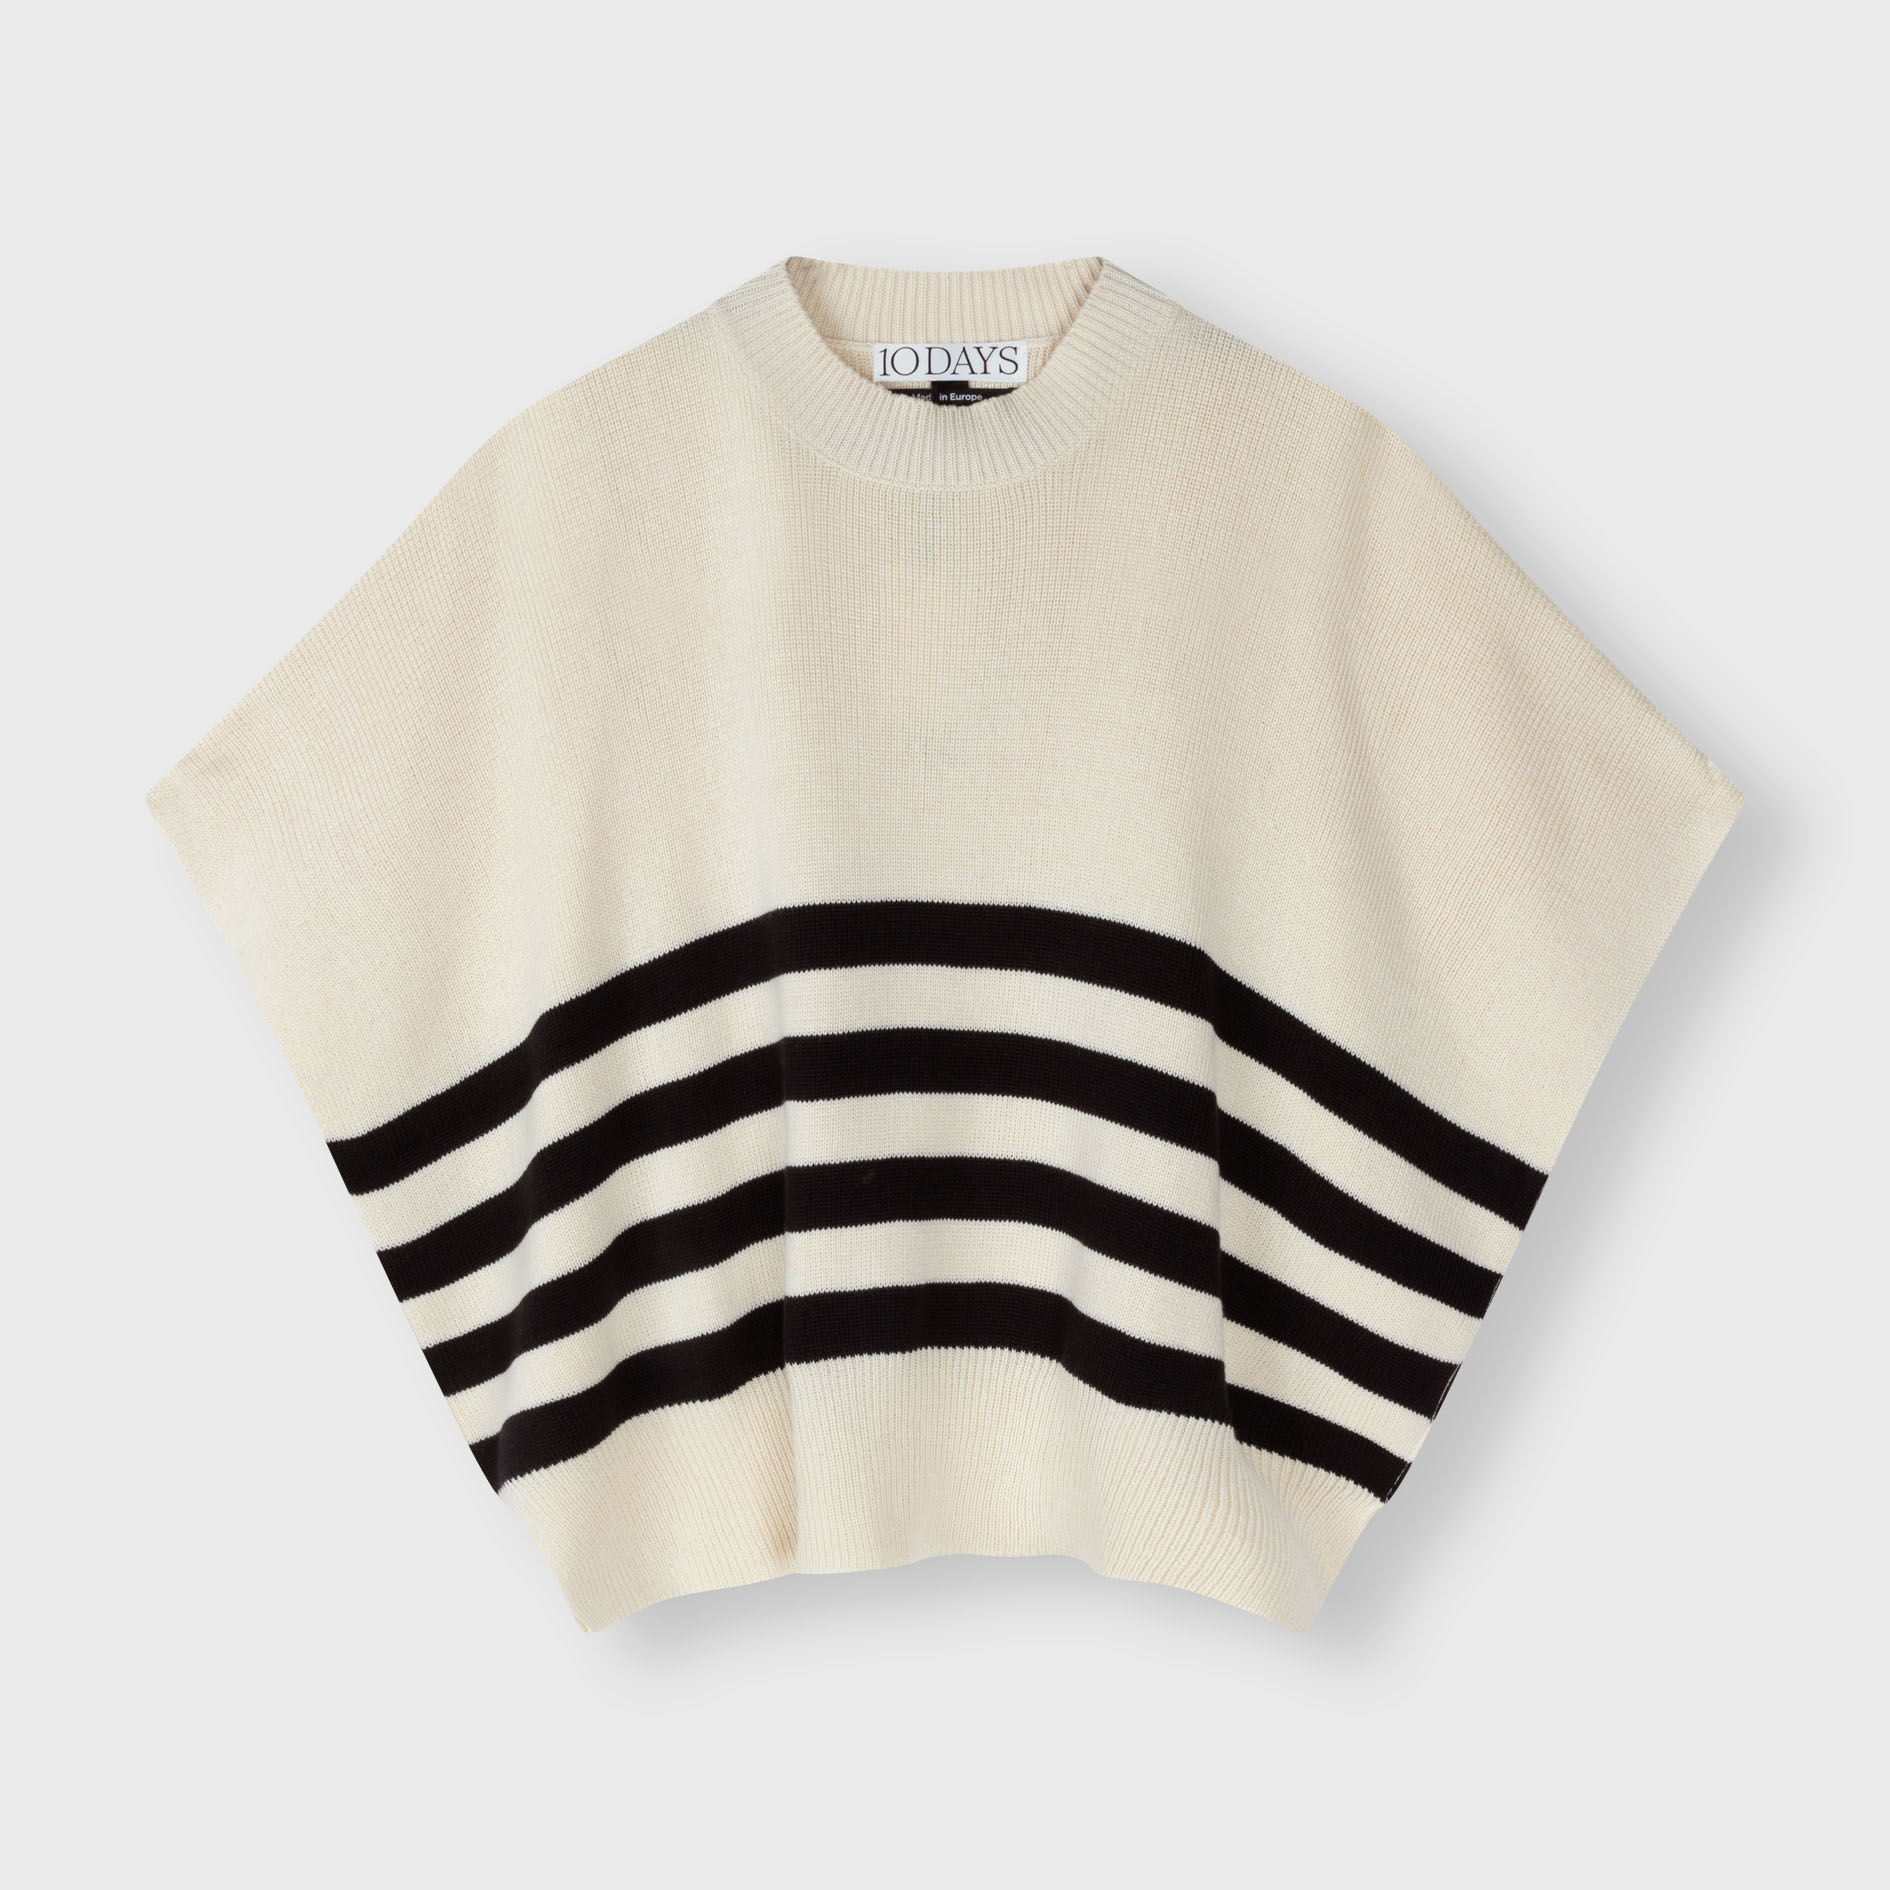 10Days Sleeveless Sweater Knit Stripes